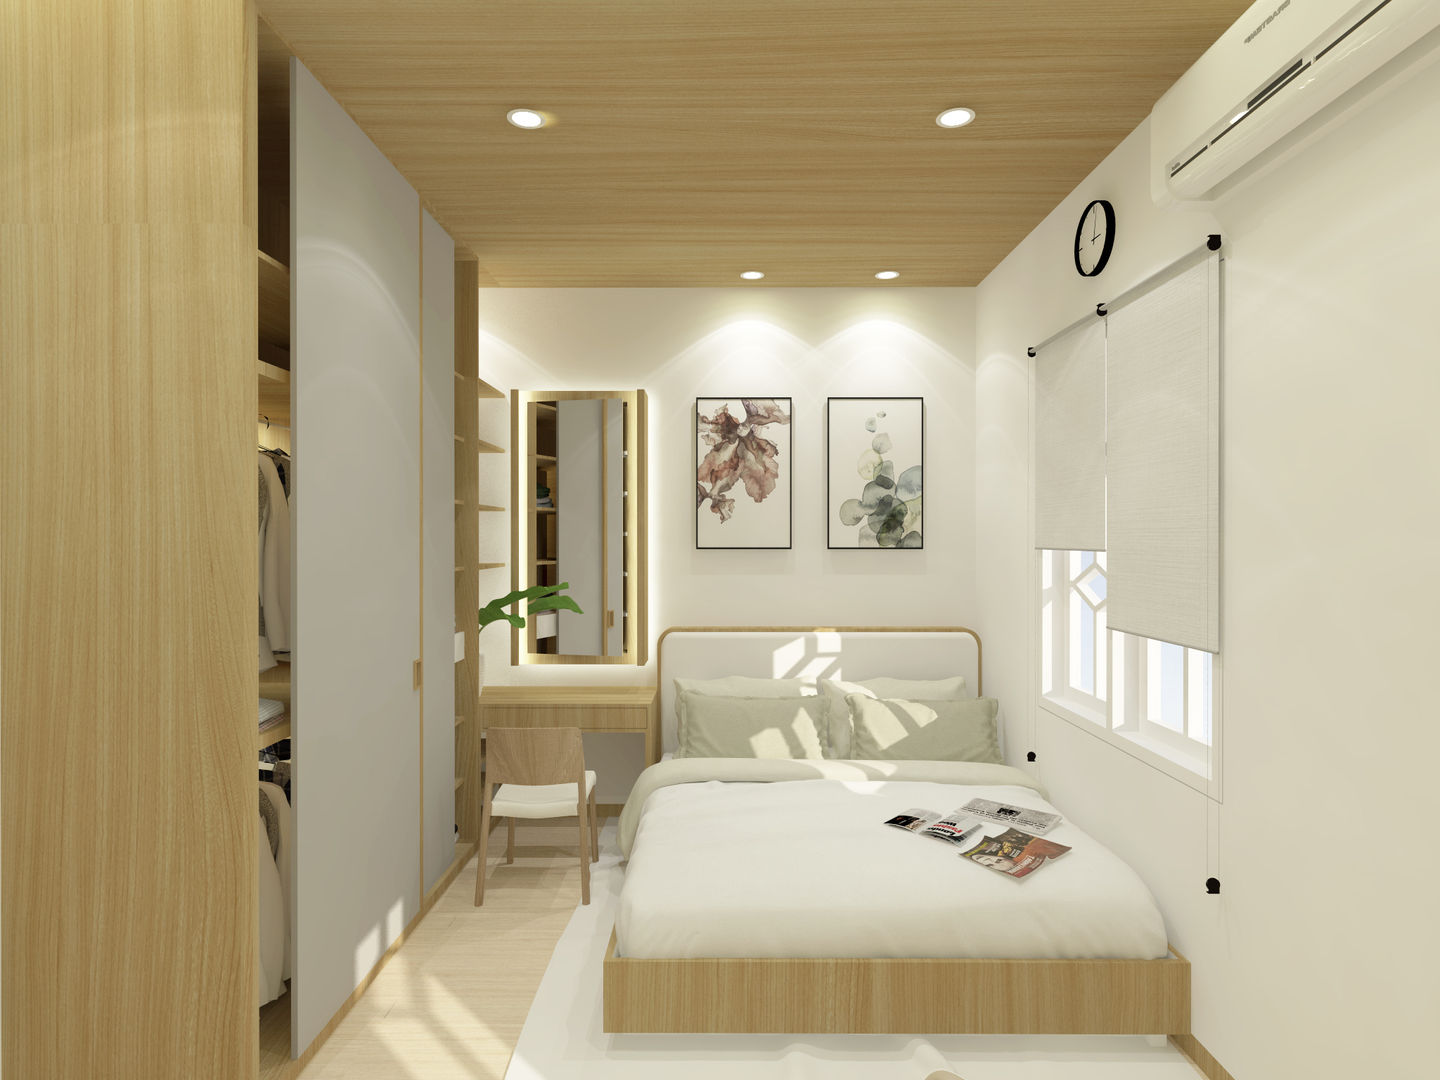 Mr.Adrian's Bedroom Design, SEKALA Studio SEKALA Studio Kamar Tidur Modern interiordesign,desaininterior,house,room,home,masterbedroom,arsitek,arsitektur